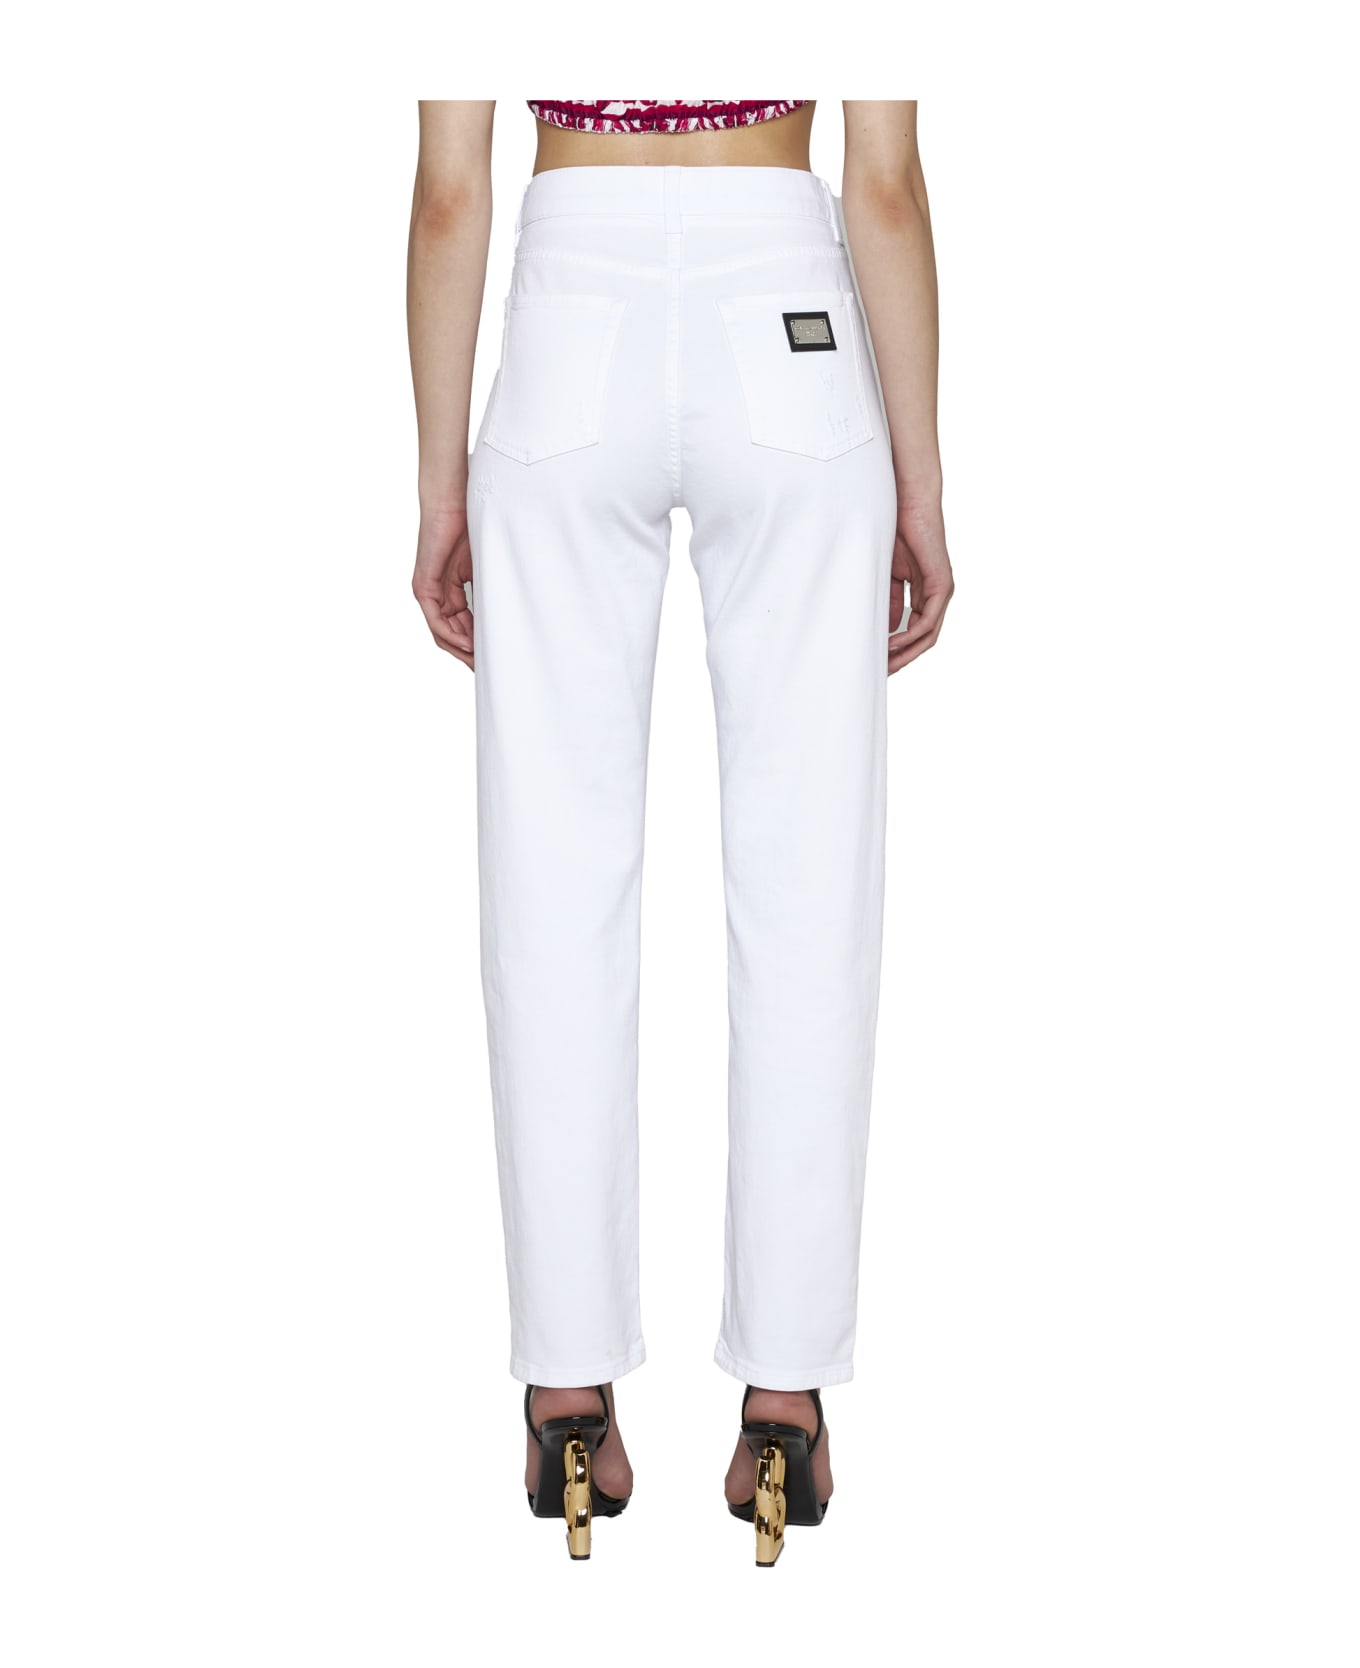 Dolce & Gabbana Jeans - Bianco otticco ボトムス